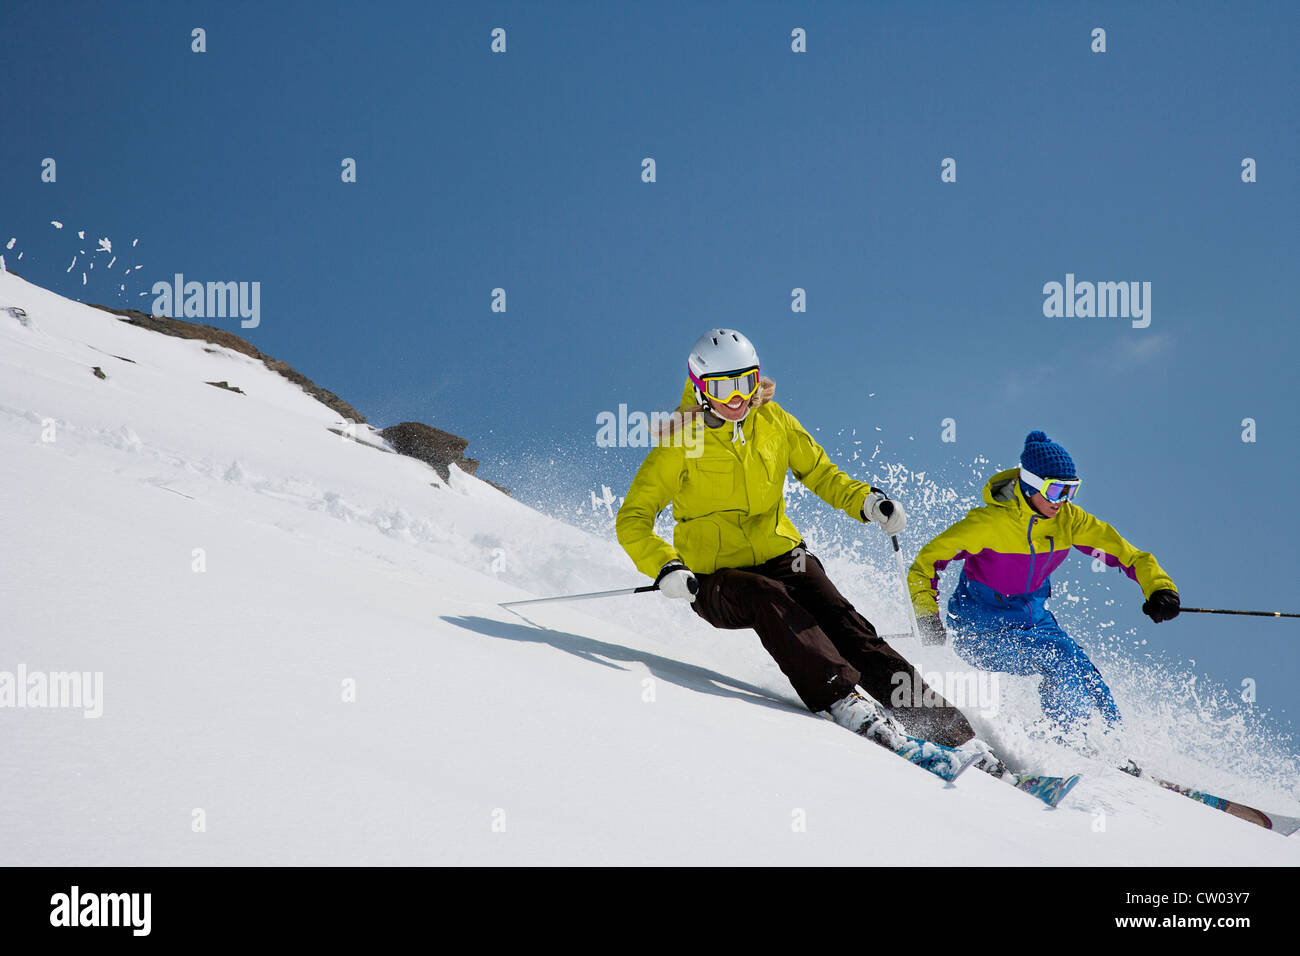 Skiers coasting on snowy slope Stock Photo